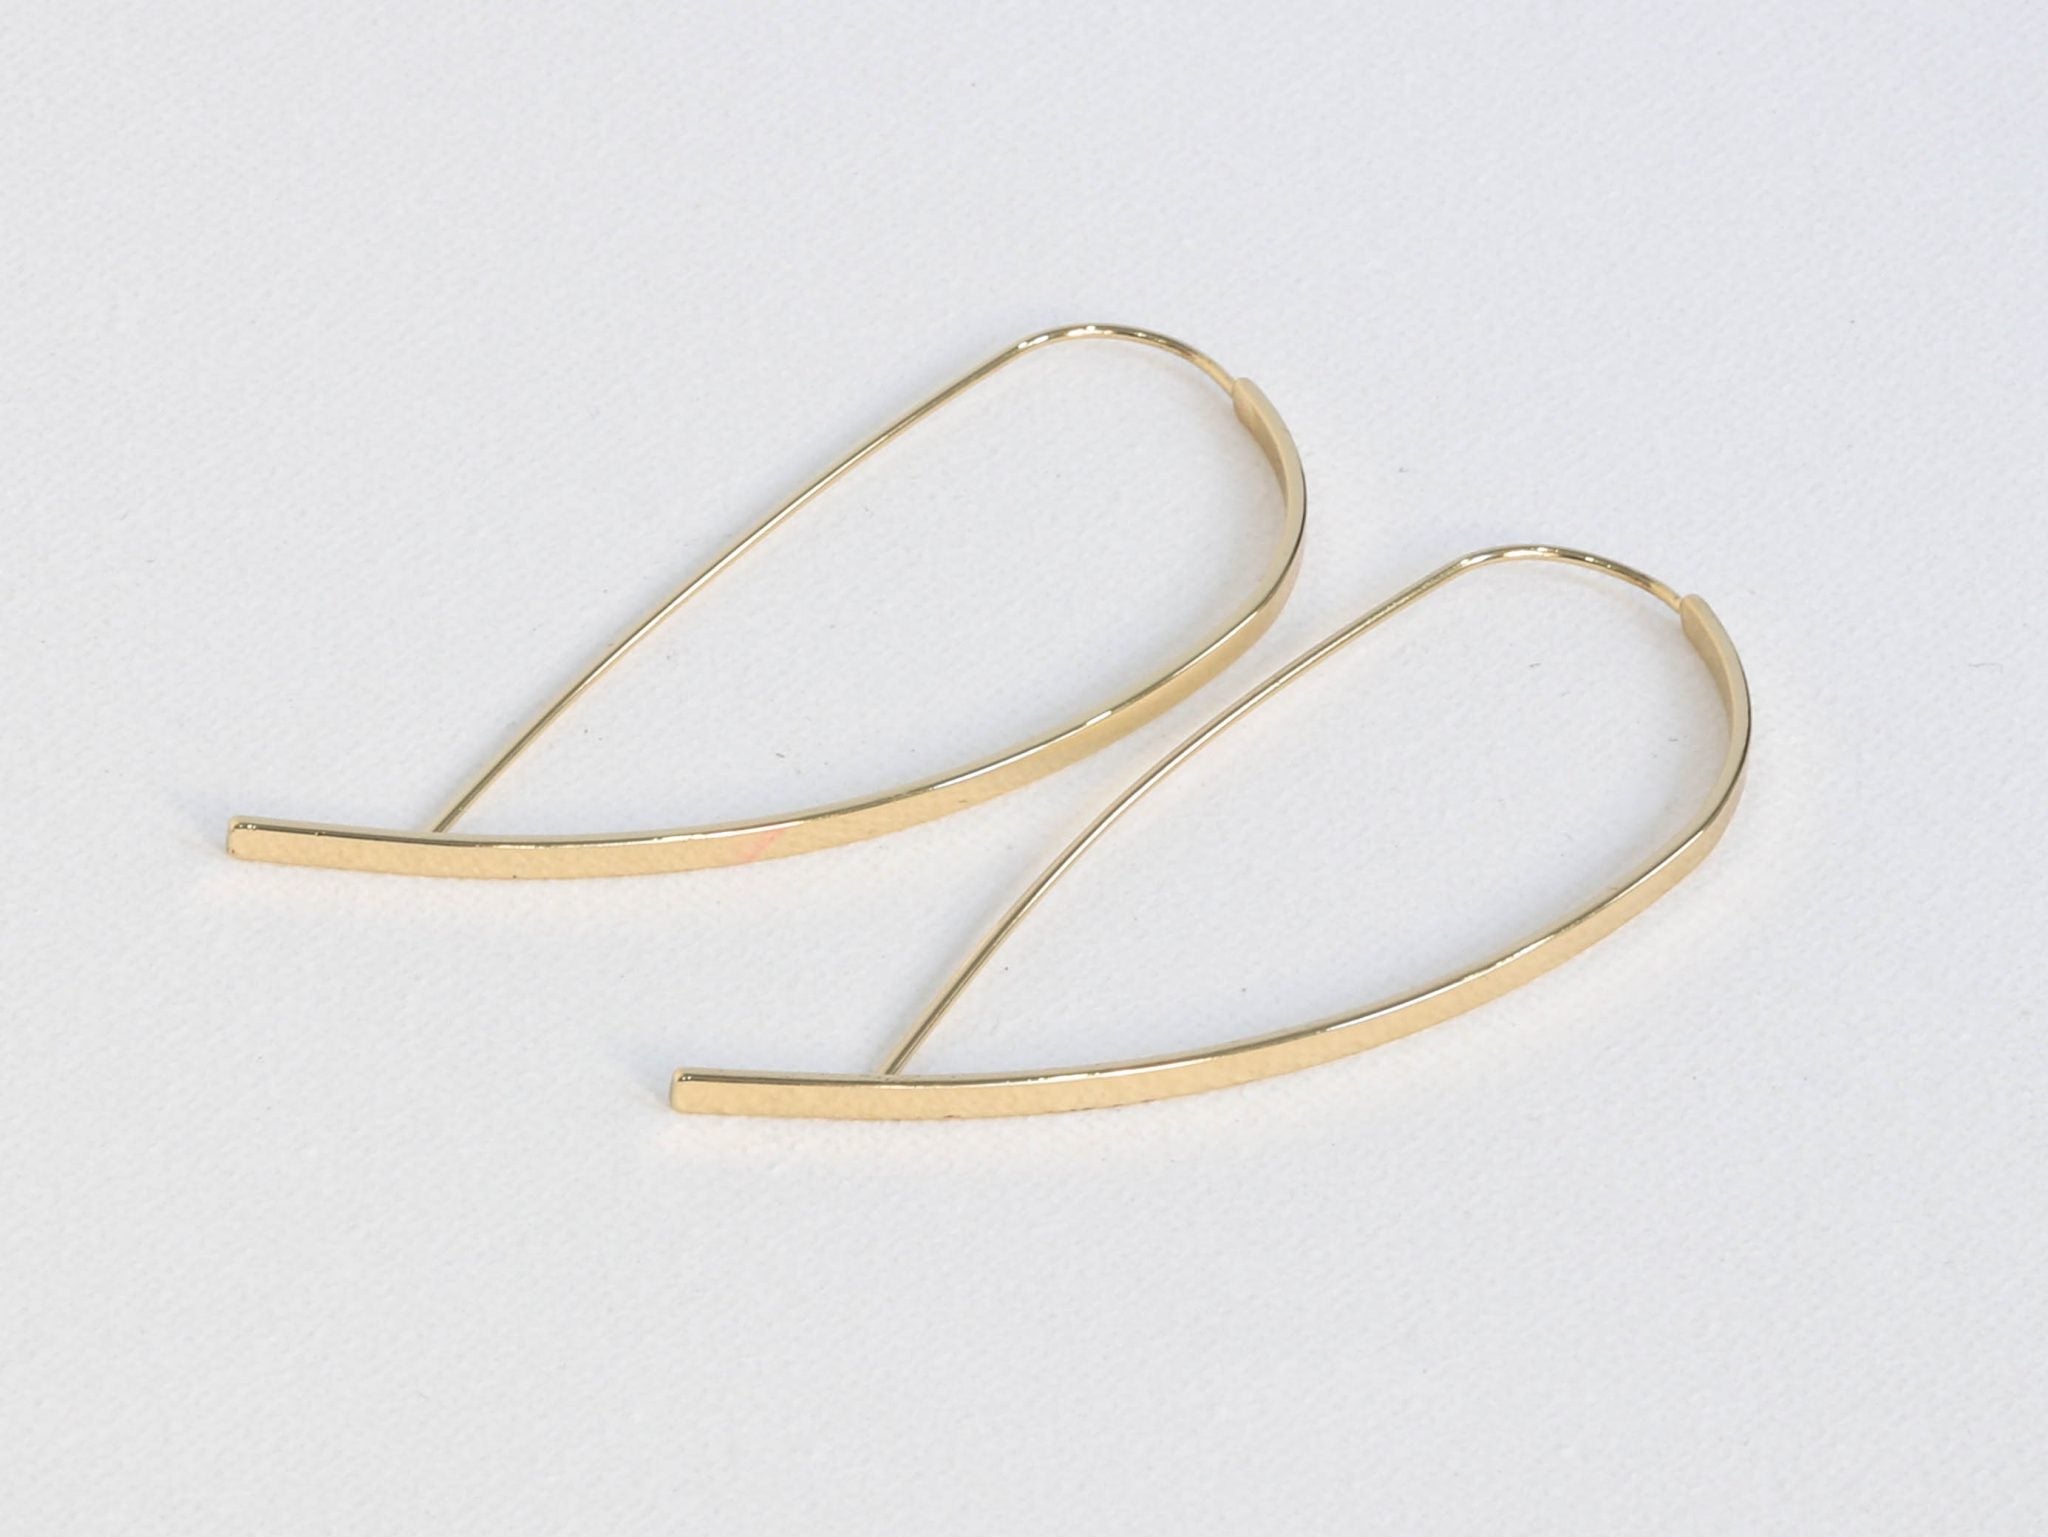 Gold Ingrid Earrings - The Nancy Smillie Shop - Art, Jewellery & Designer Gifts Glasgow